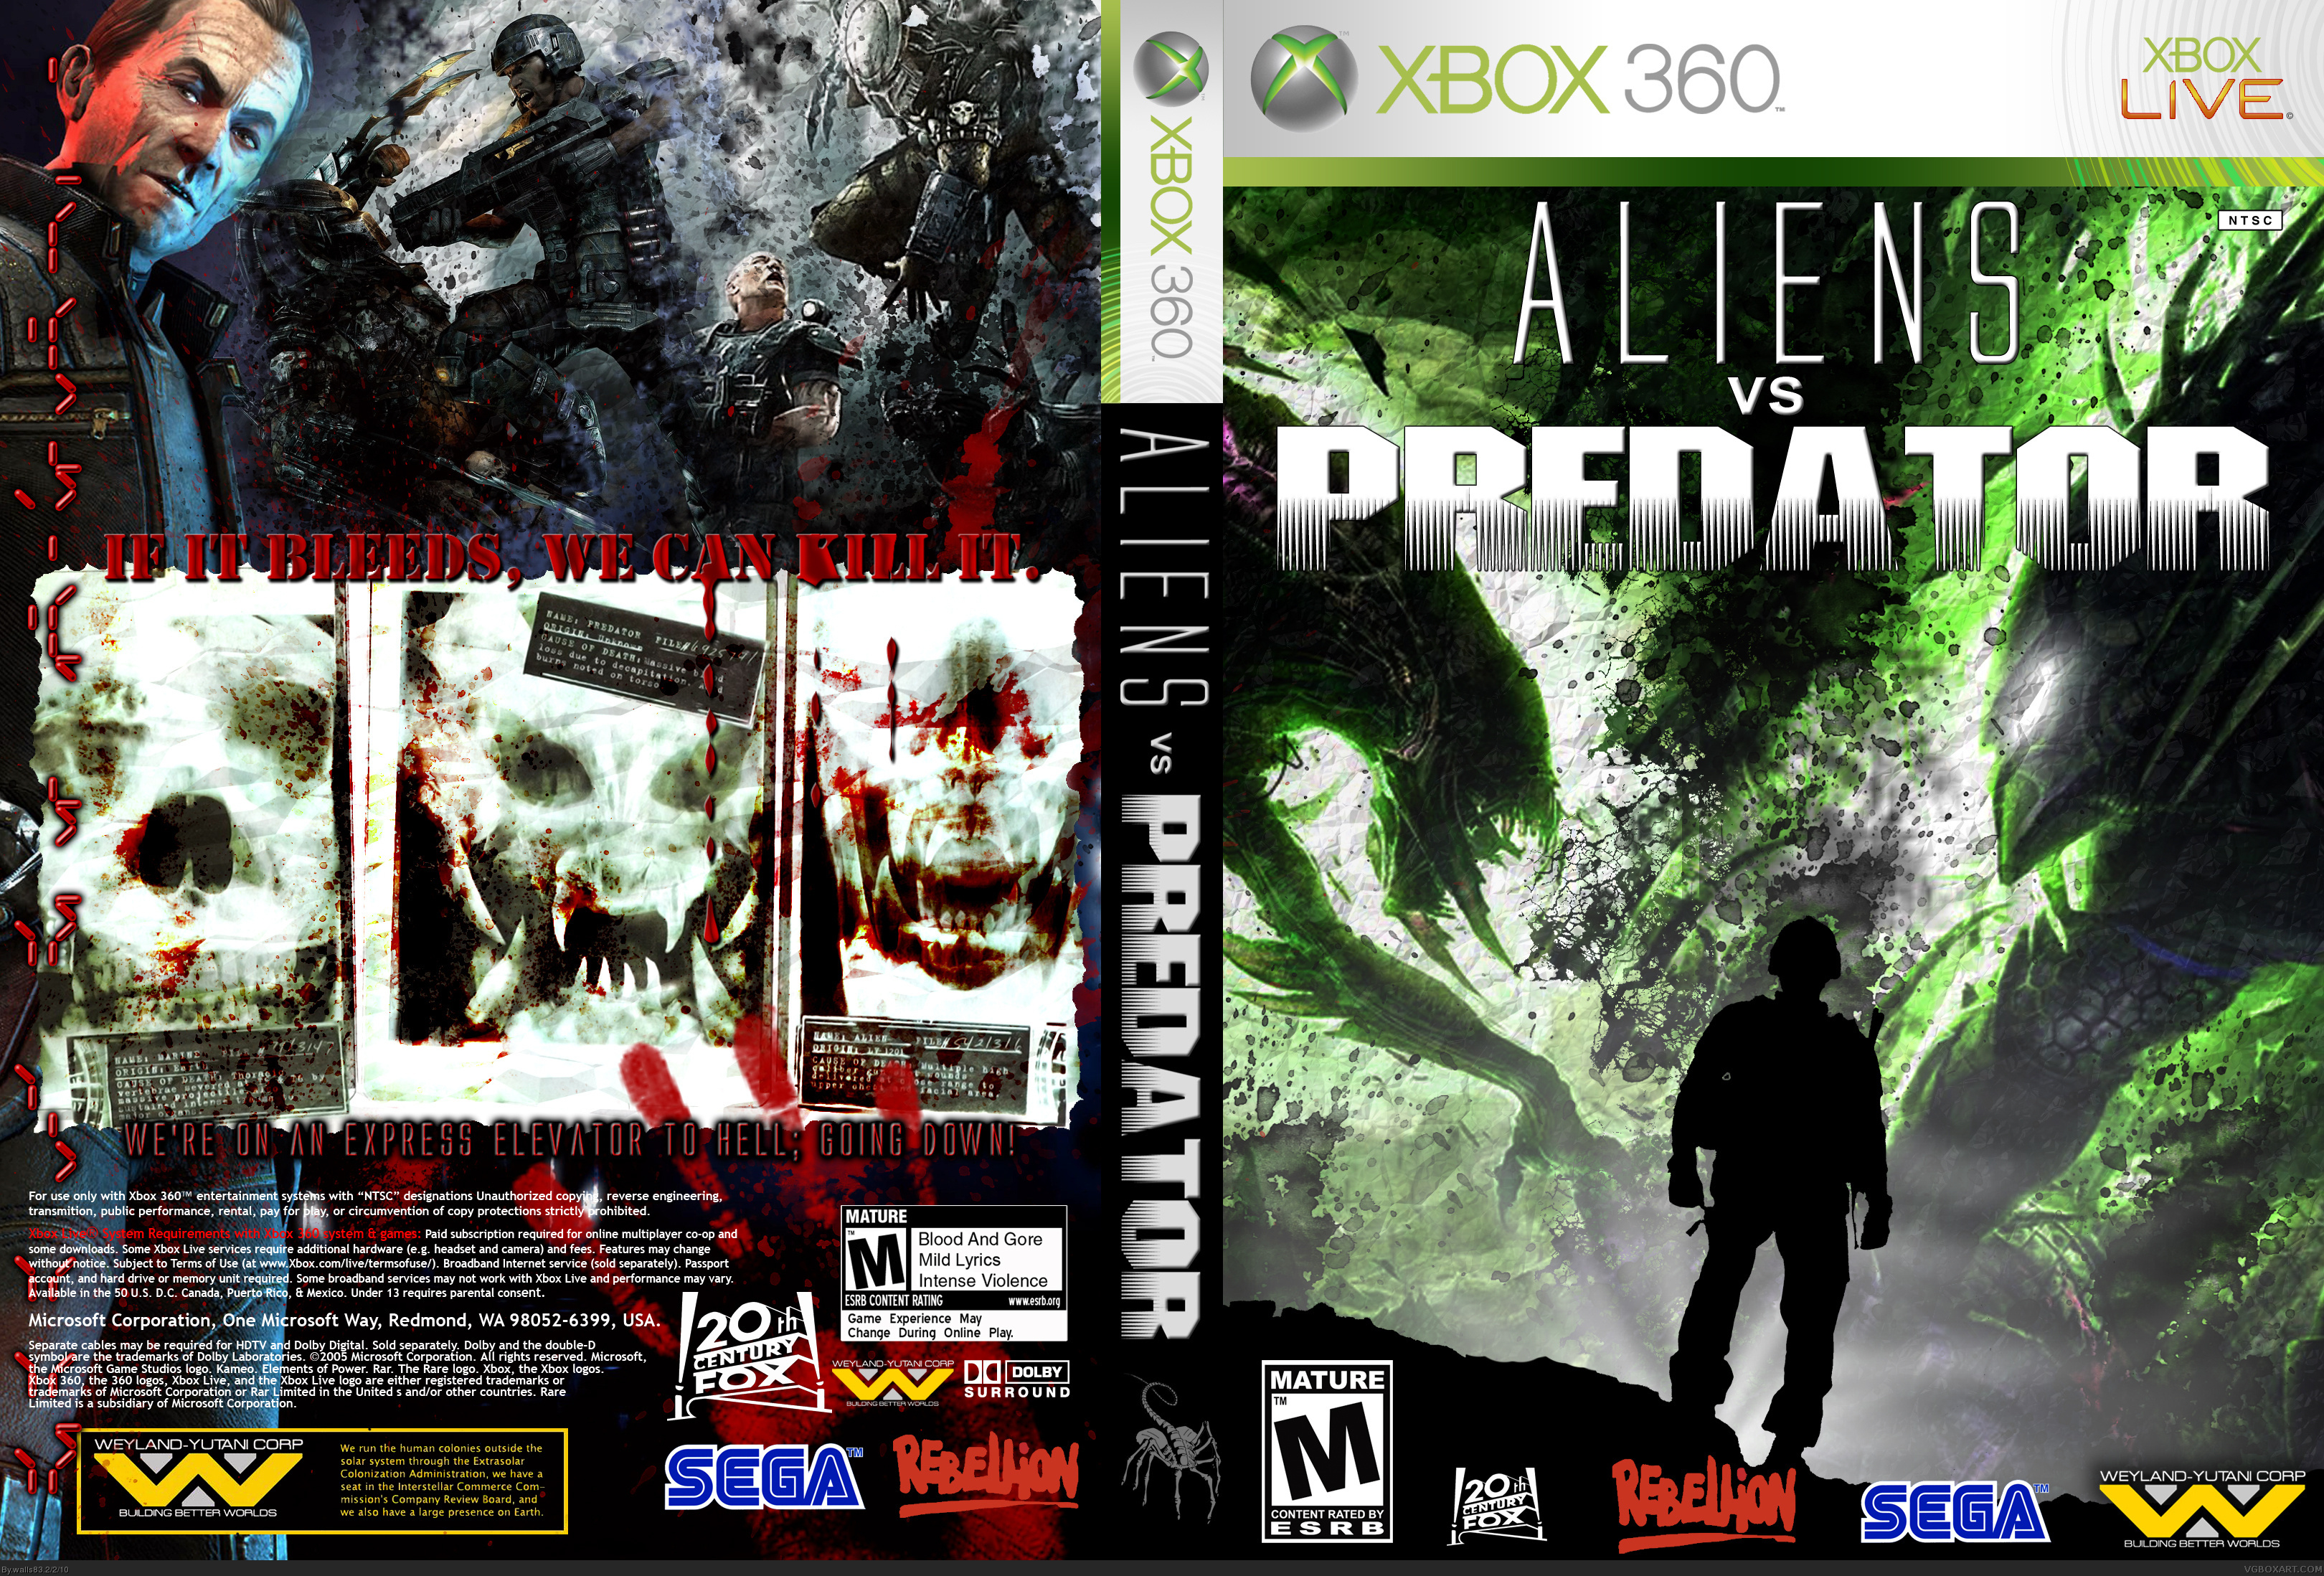 Alien versus Predator box cover